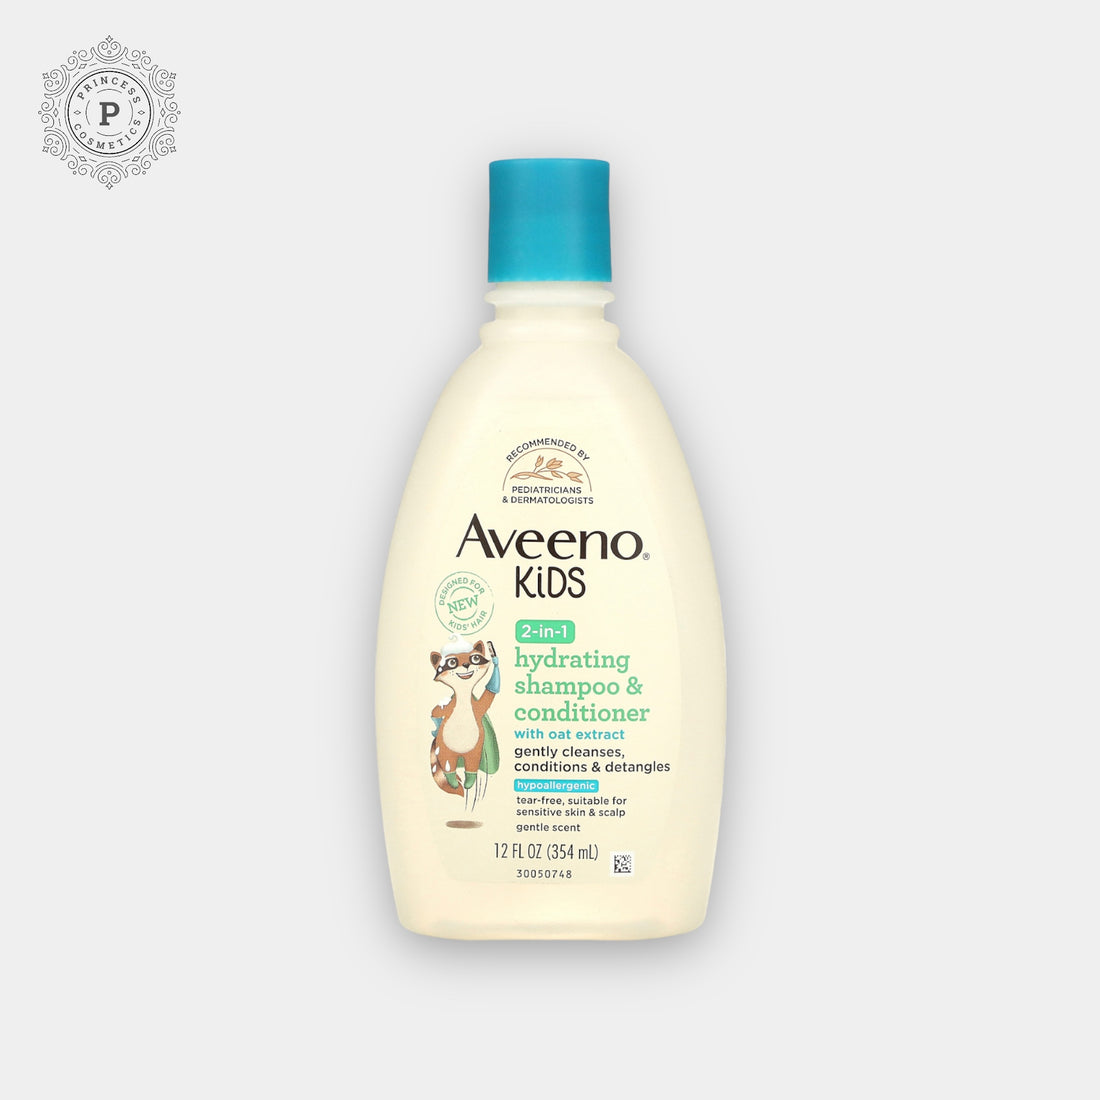 Aveeno KIDS 2-in-1 Hydrating Shampoo & Conditioner 354ml